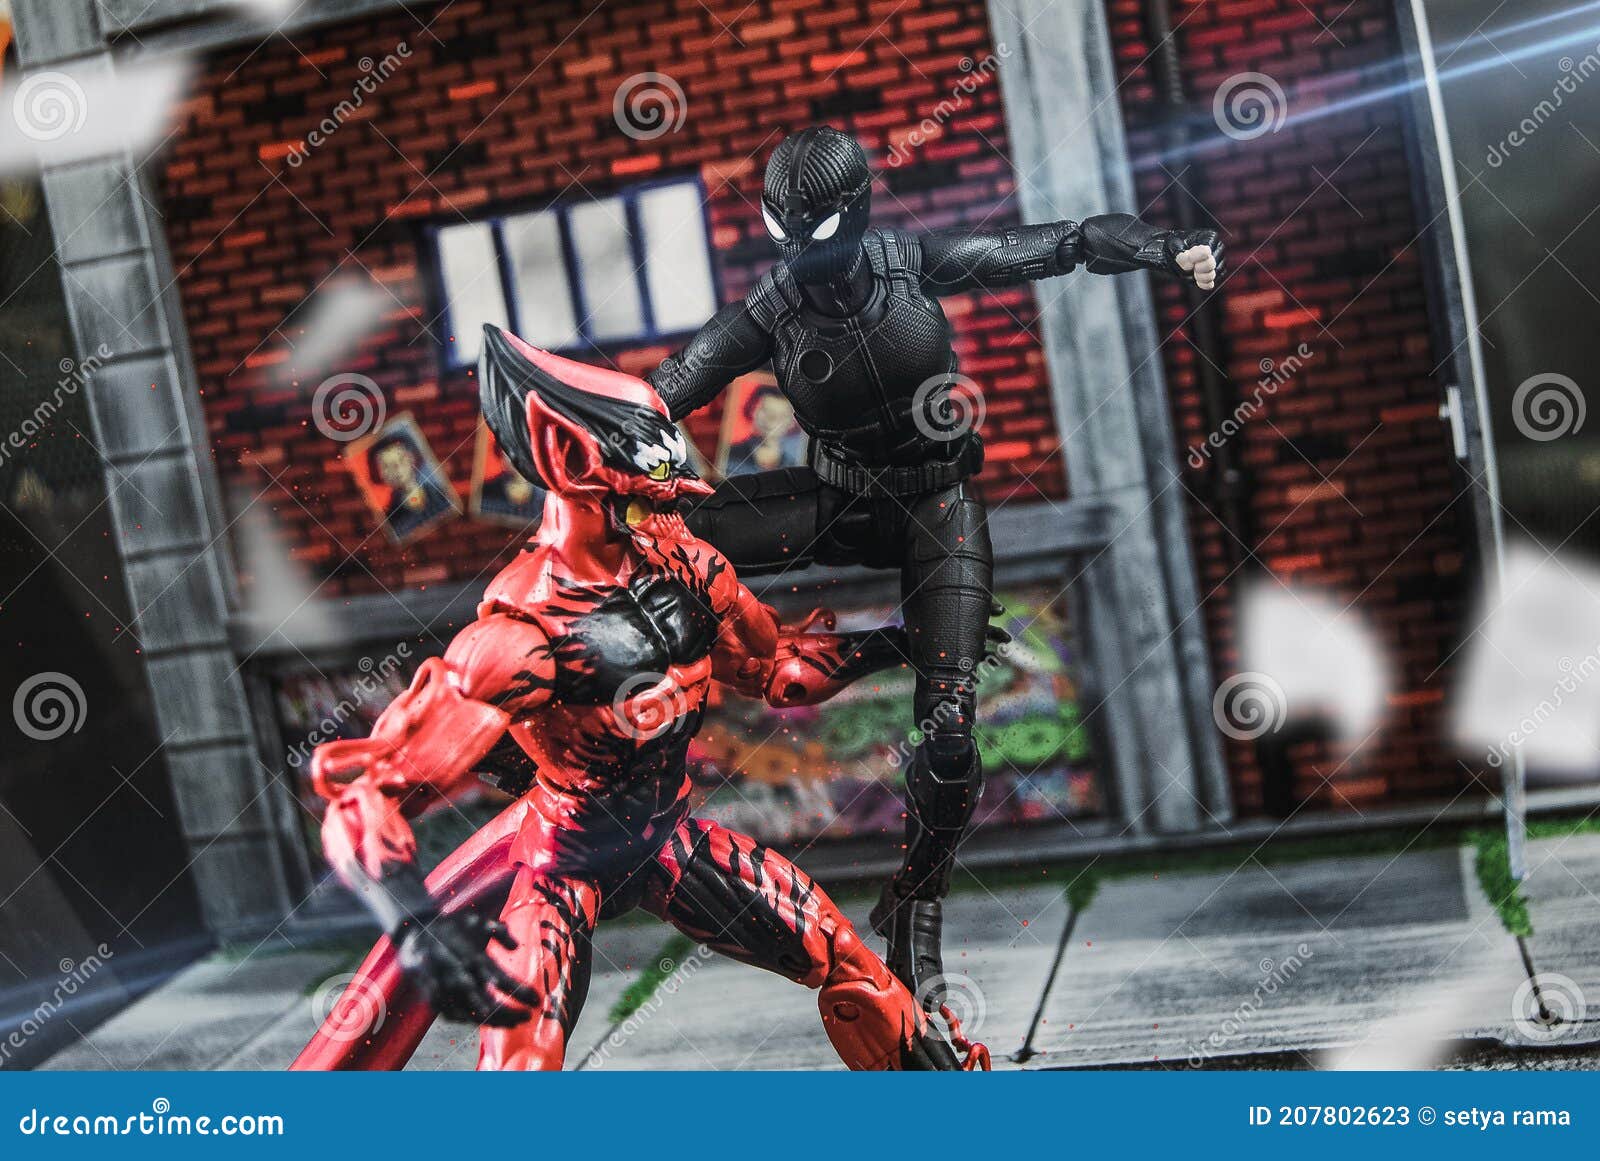 Spiderman Versus Red Goblin Marvel Editorial Stock Photo - Image of  spiderman, goblin: 207802623